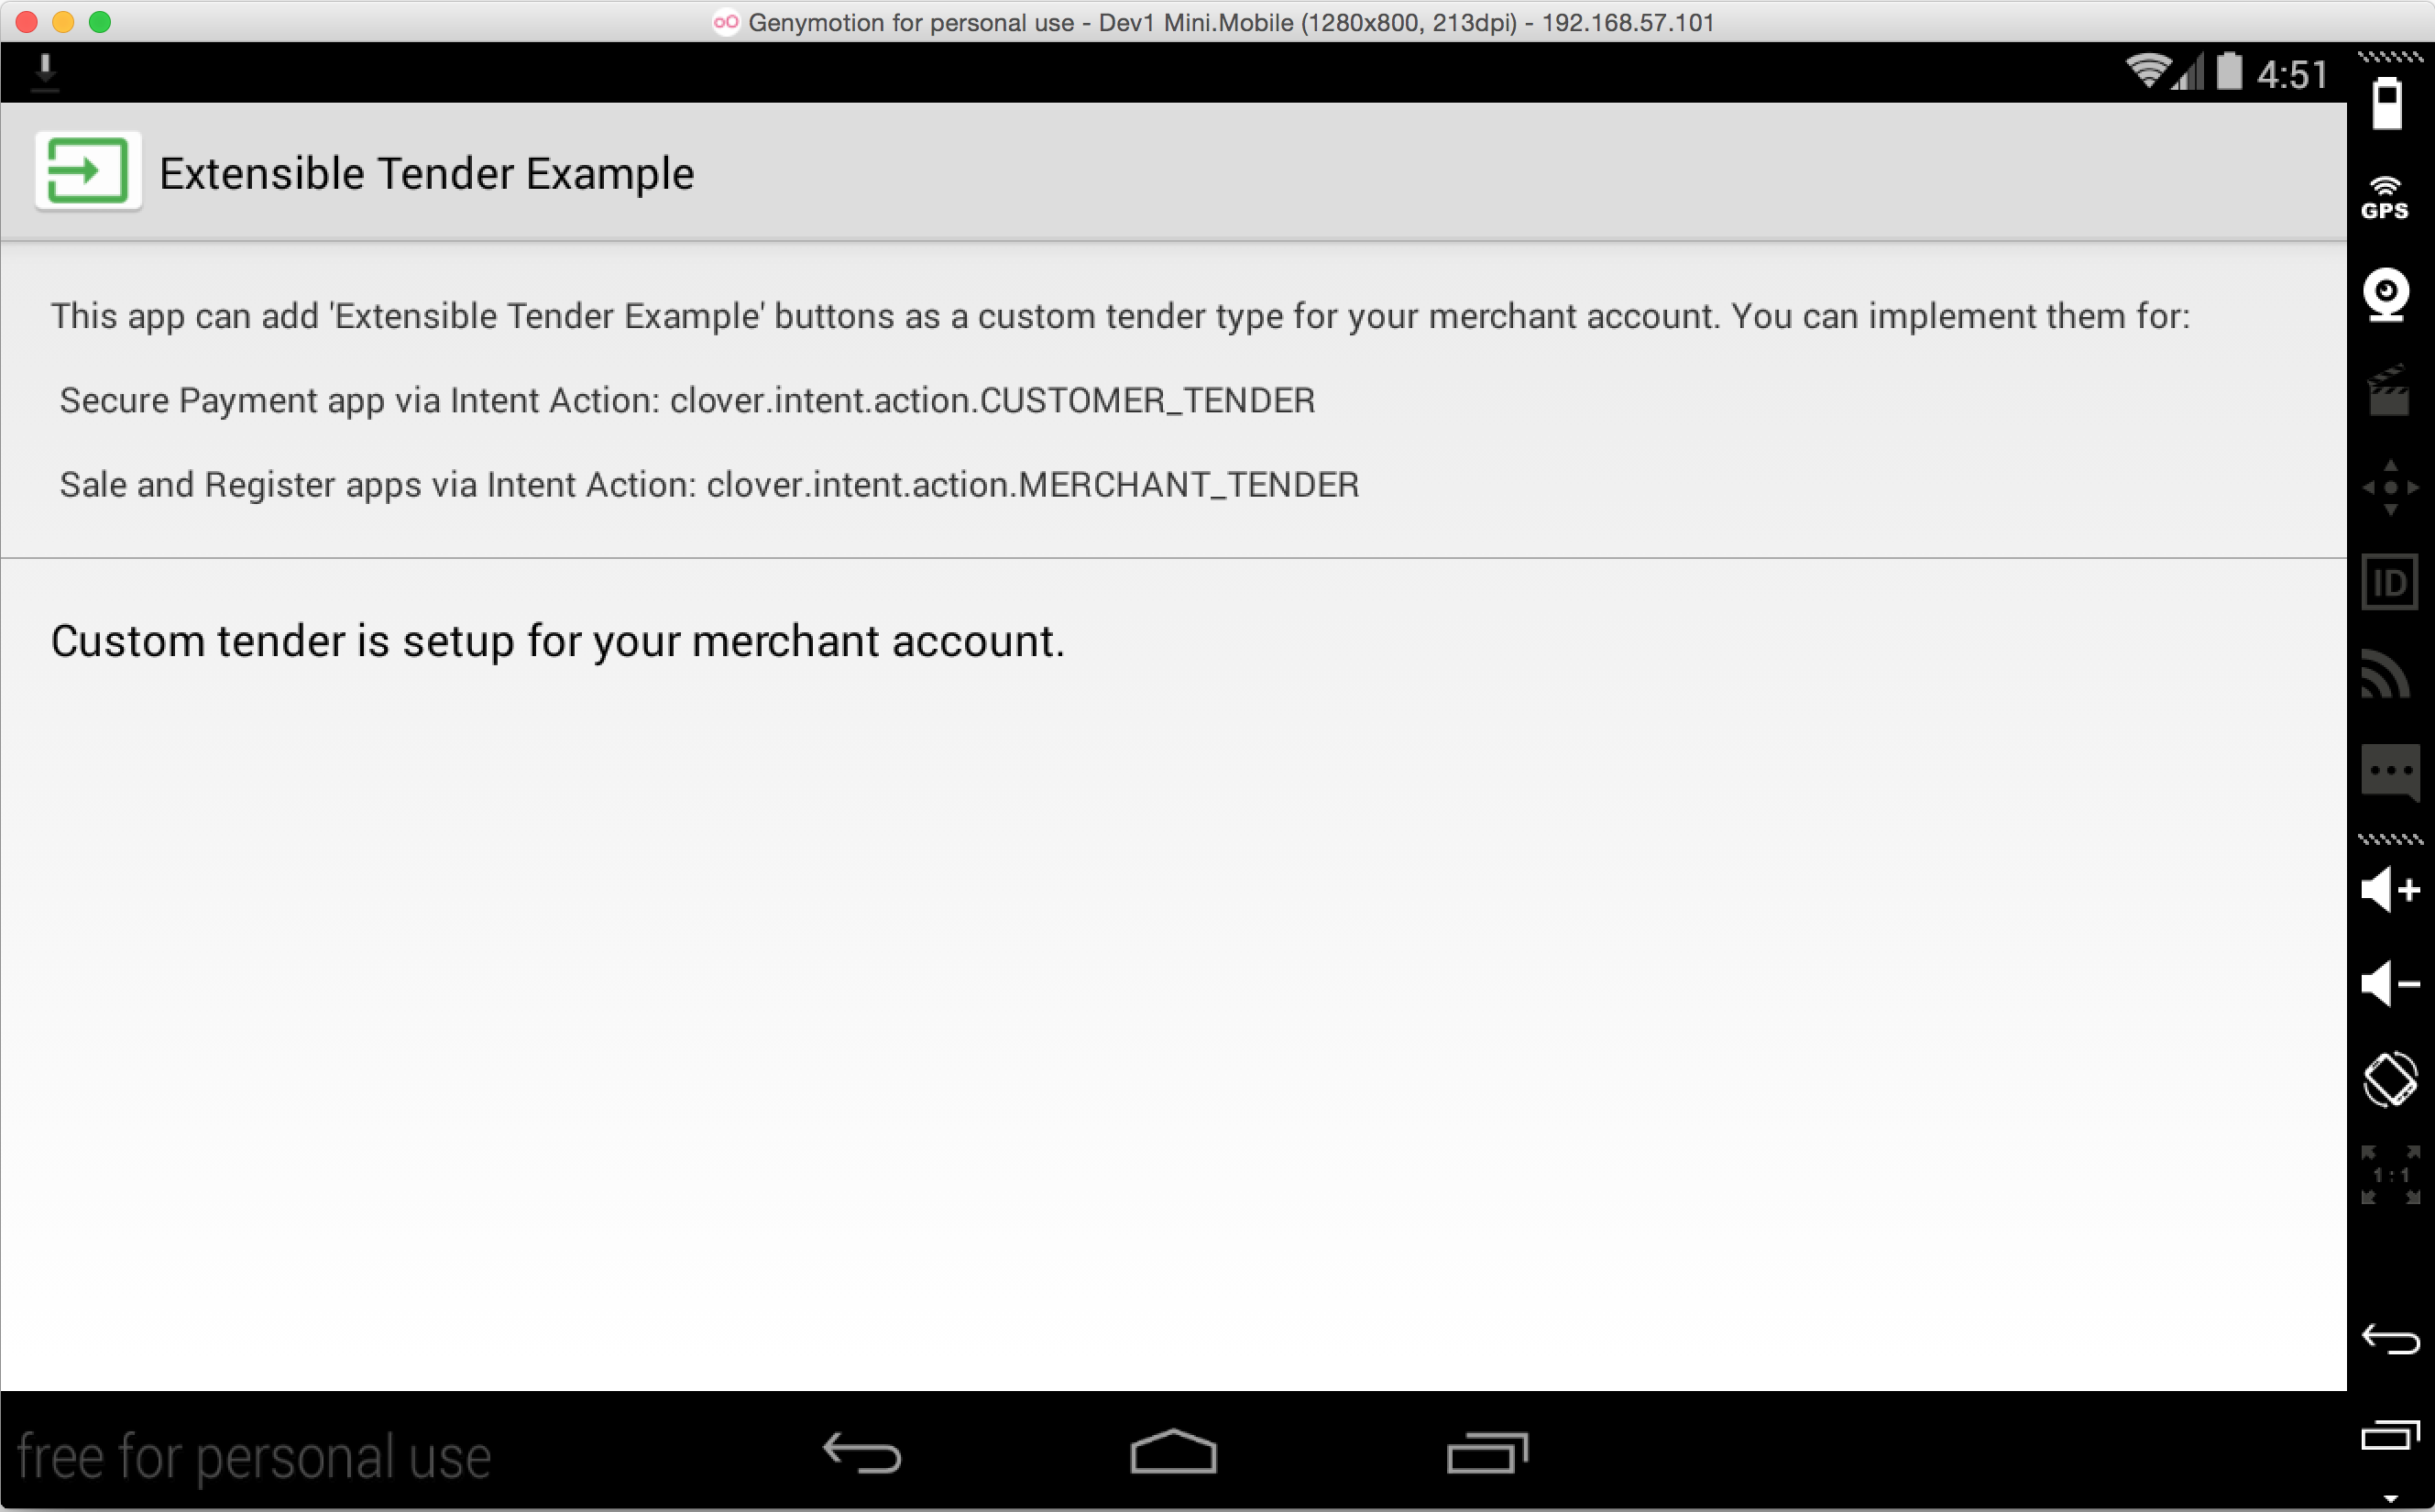 Custom Tender Initialized screen of Extensible Tender Example